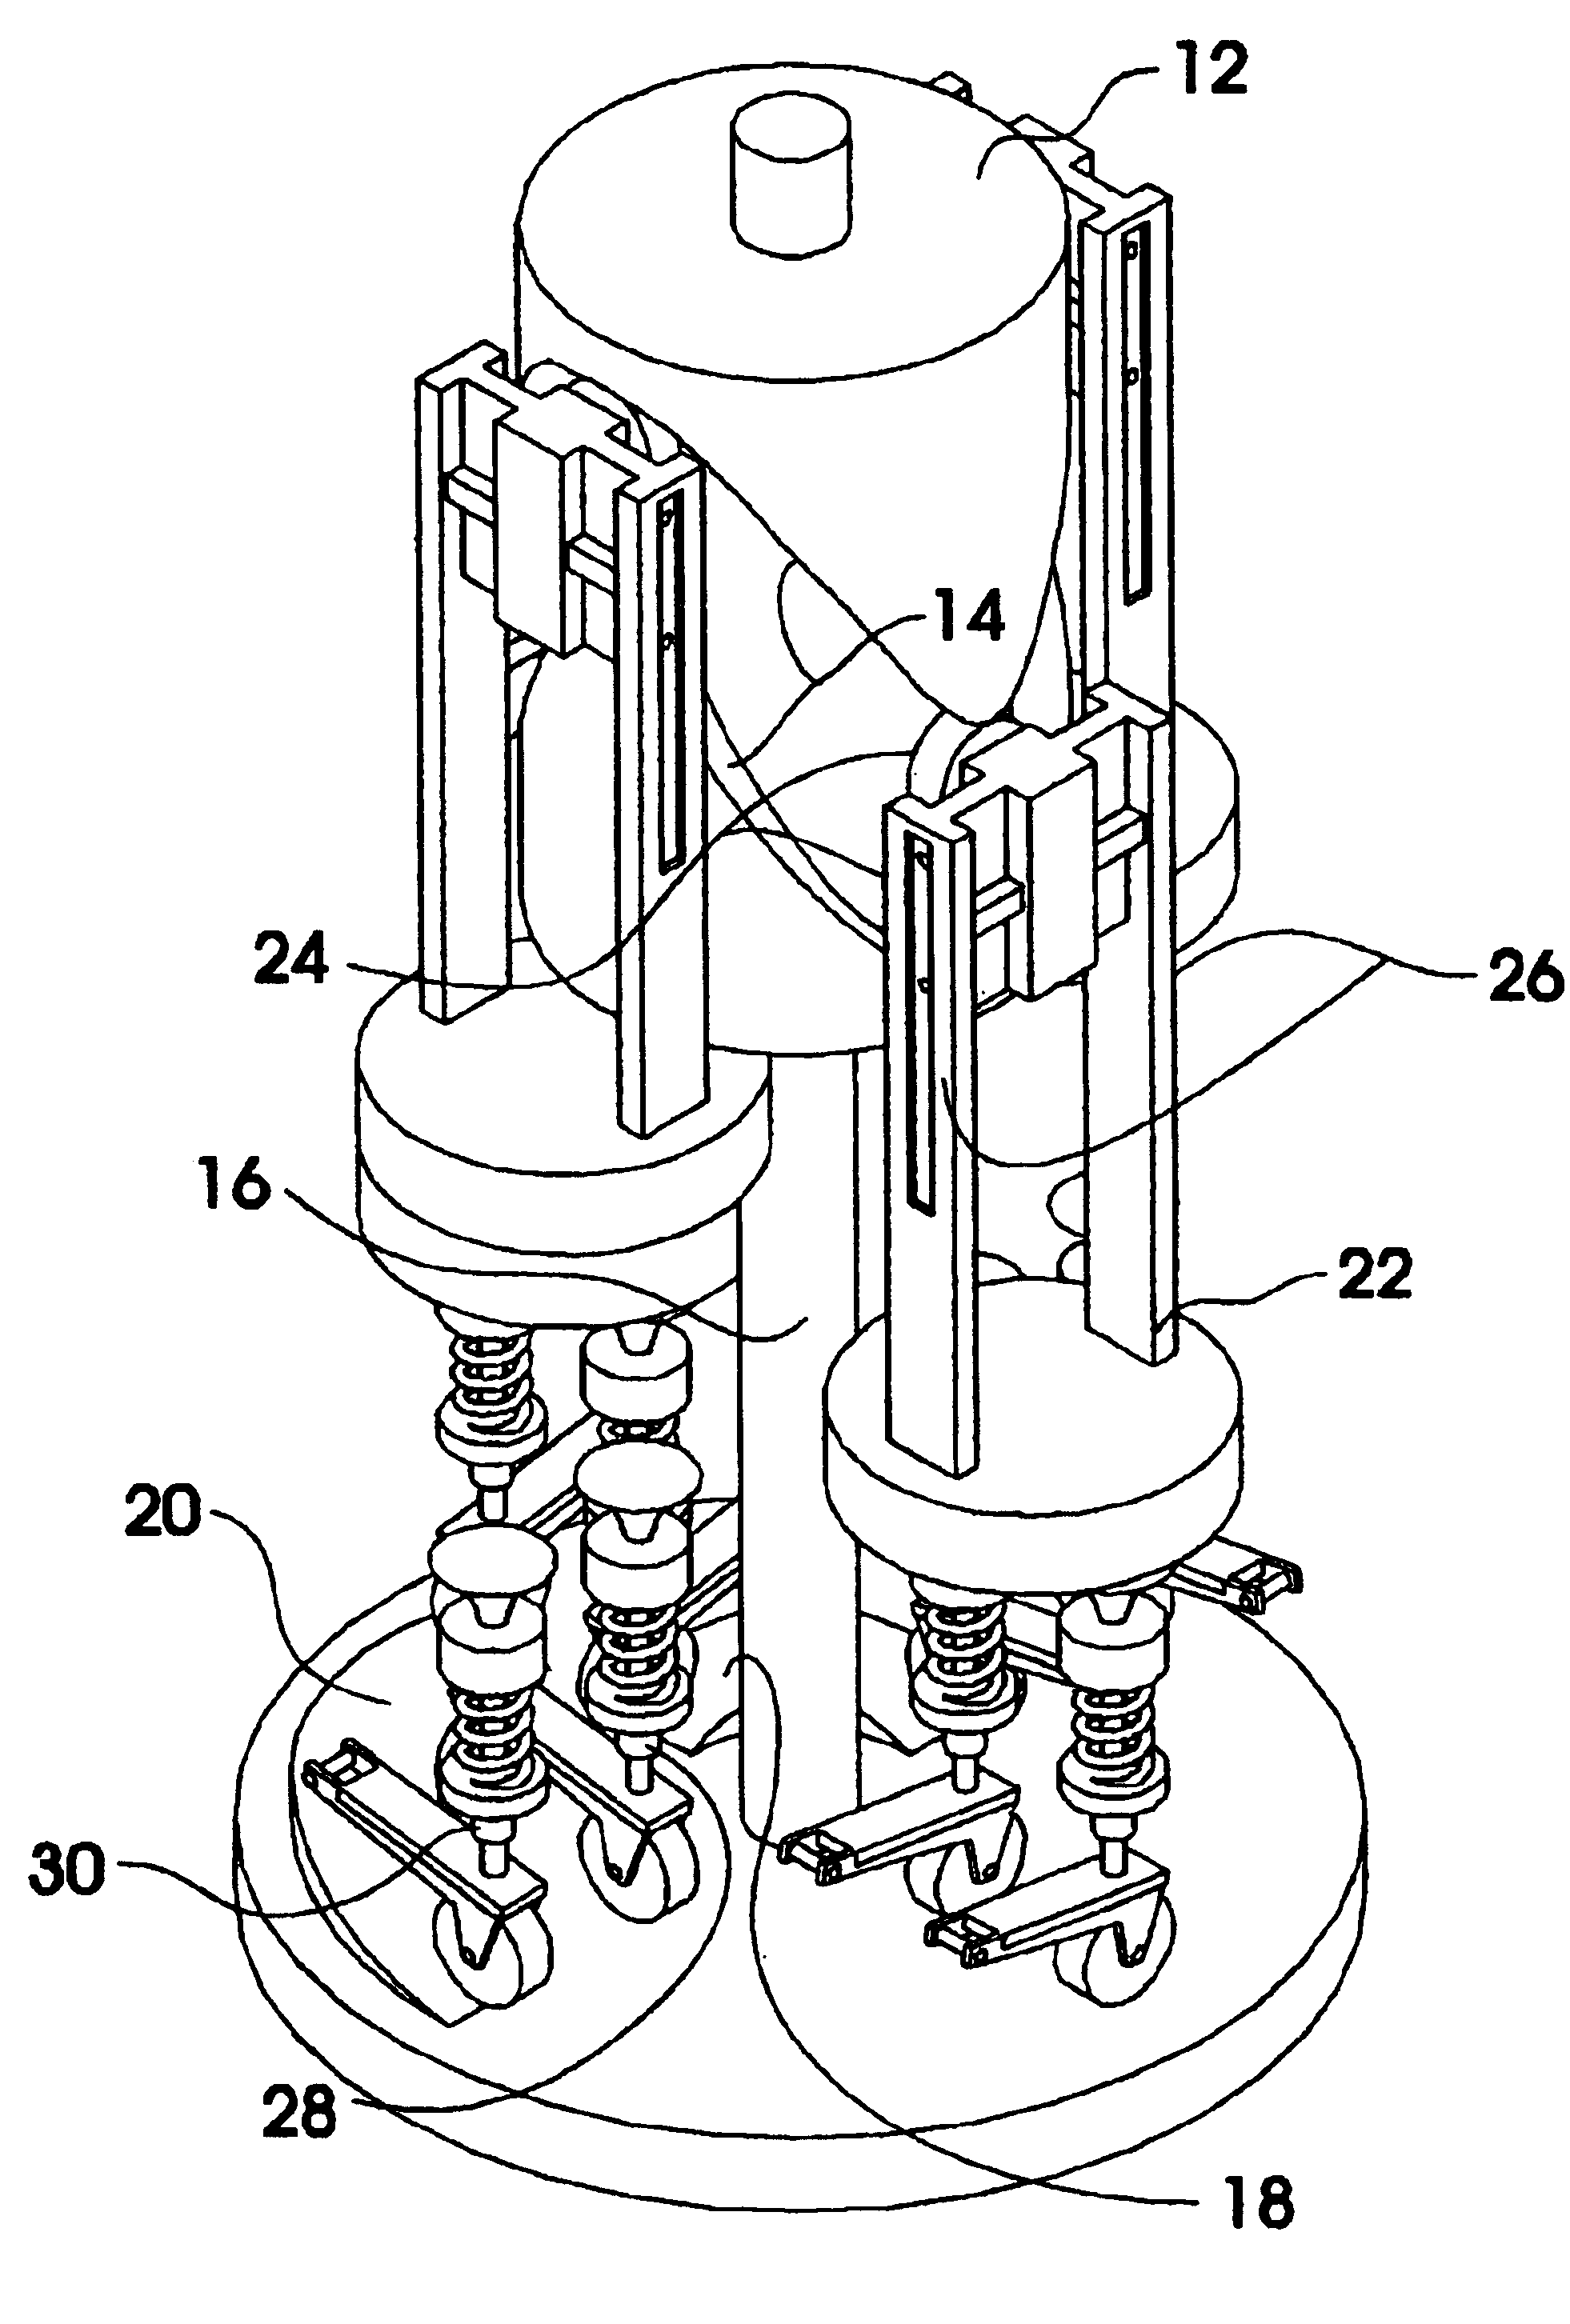 Balanced barrel-cam internal-combustion engine